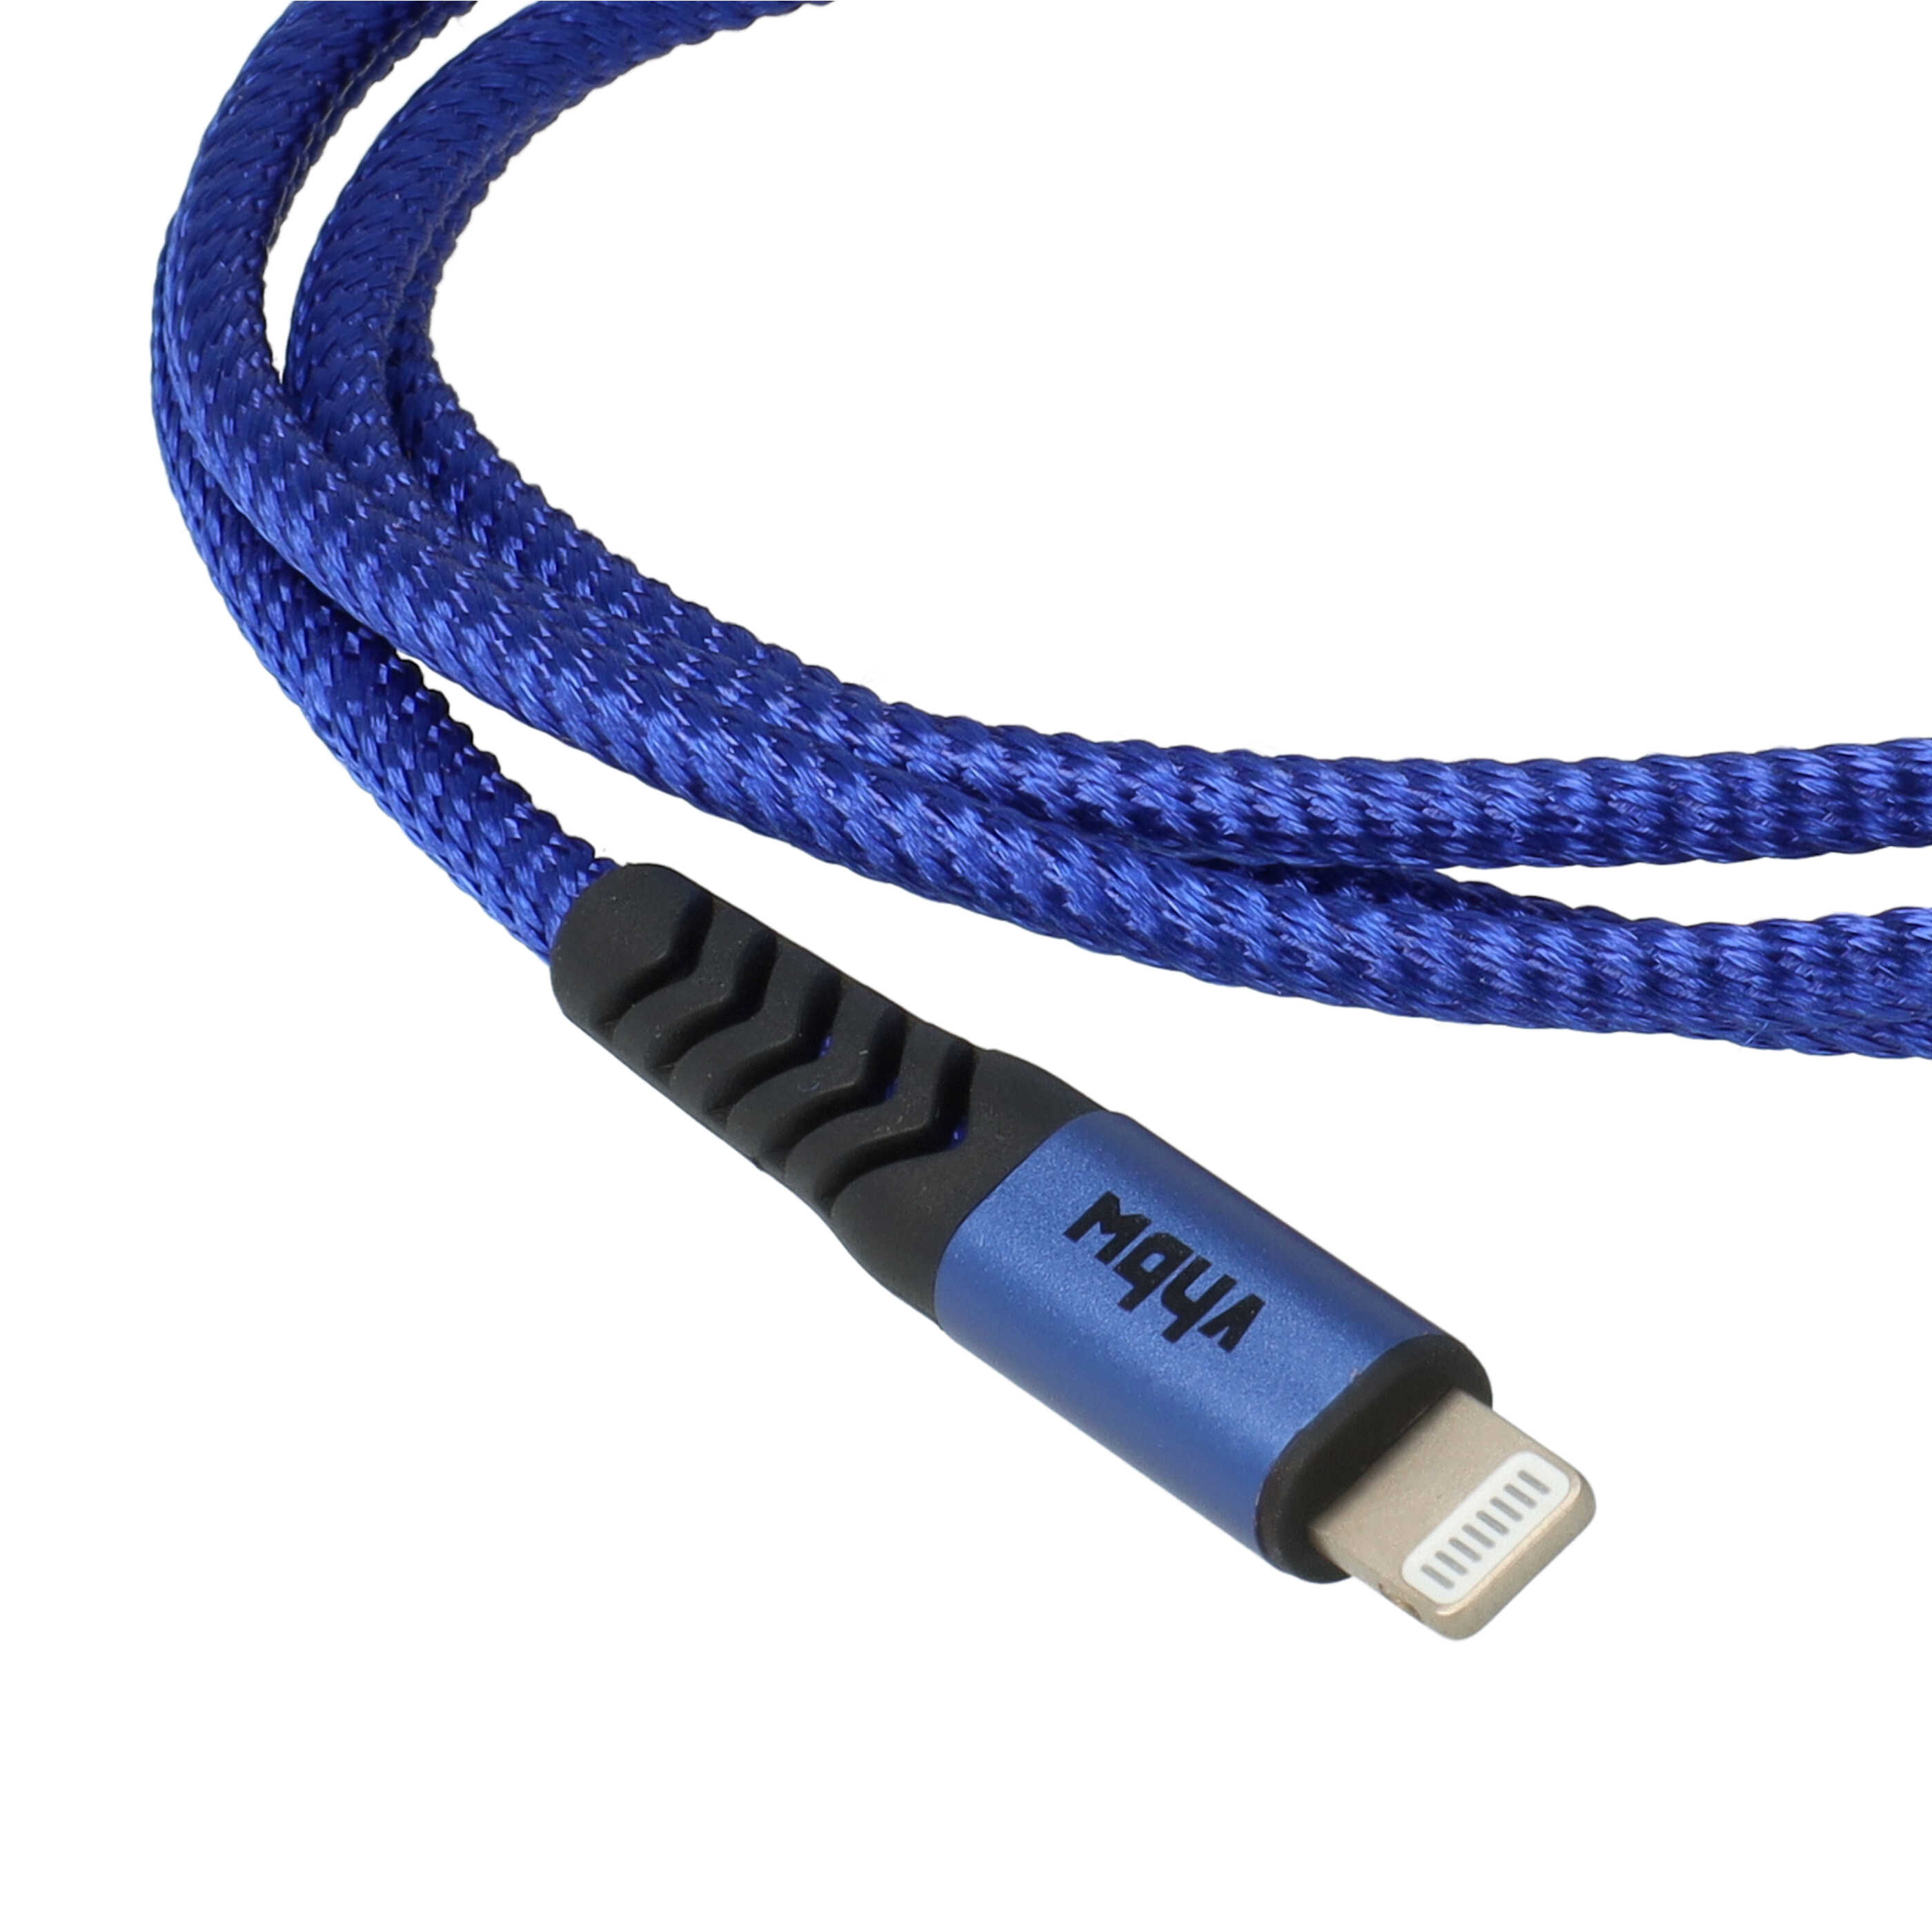 Câble Lightning vers USB C, Thunderbolt 3 pour iOS Apple MacBook - noir / bleu, 100cm